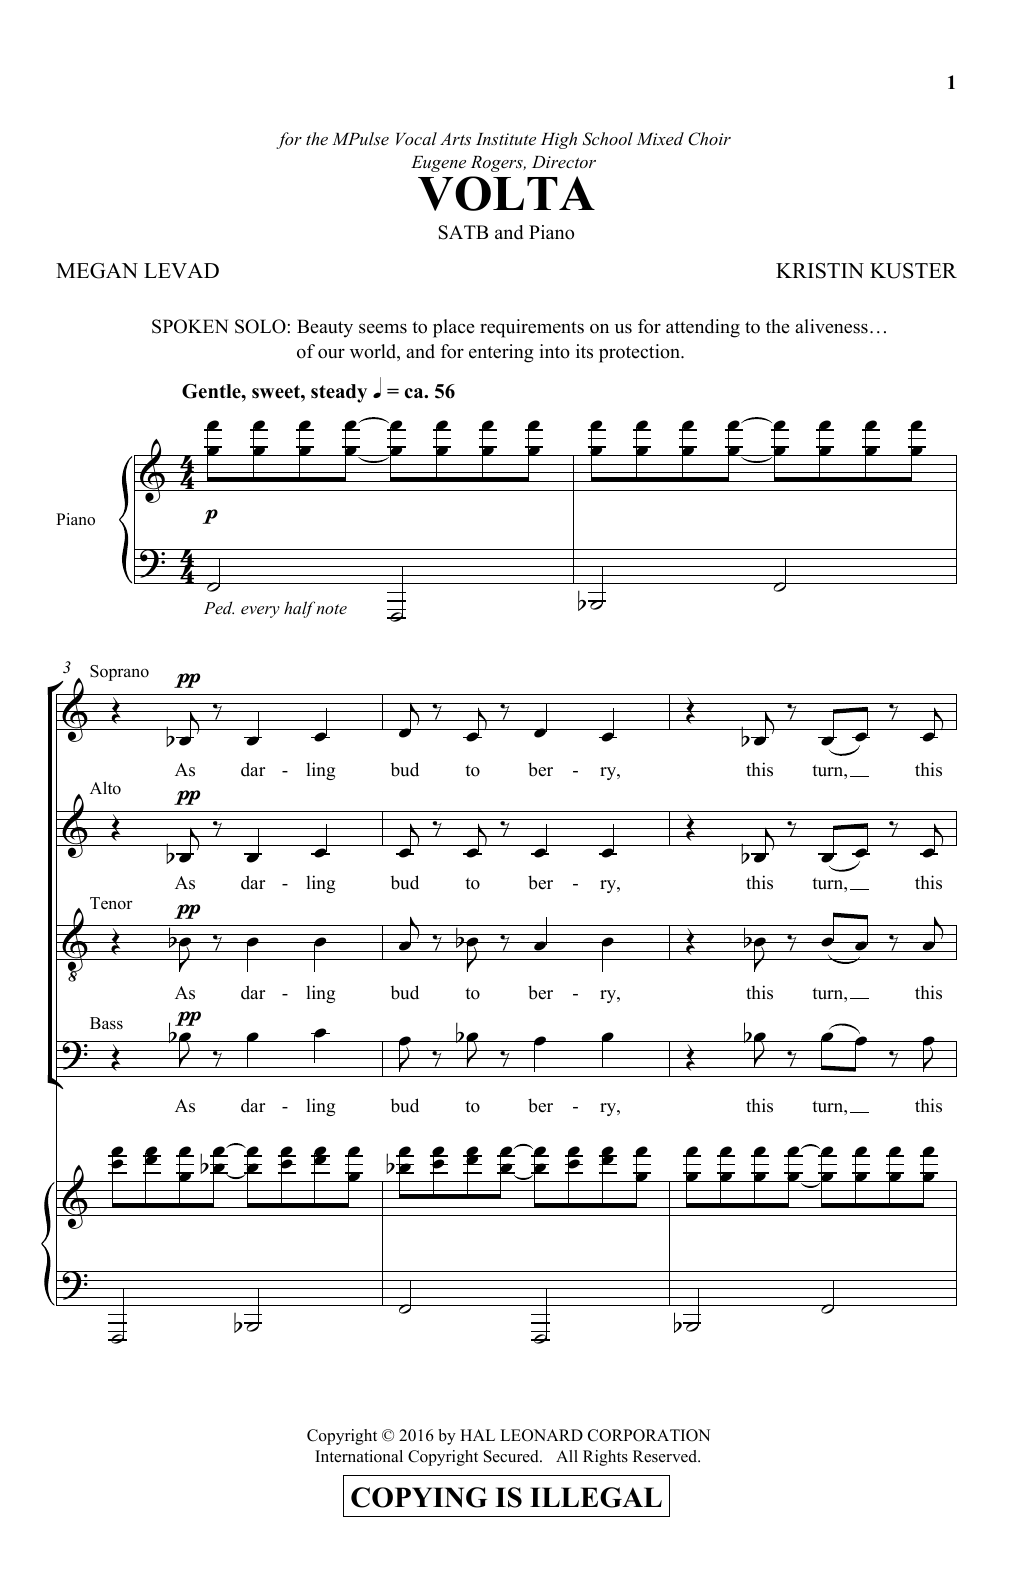 Kristin Kuster Volta Sheet Music Notes & Chords for SATB - Download or Print PDF